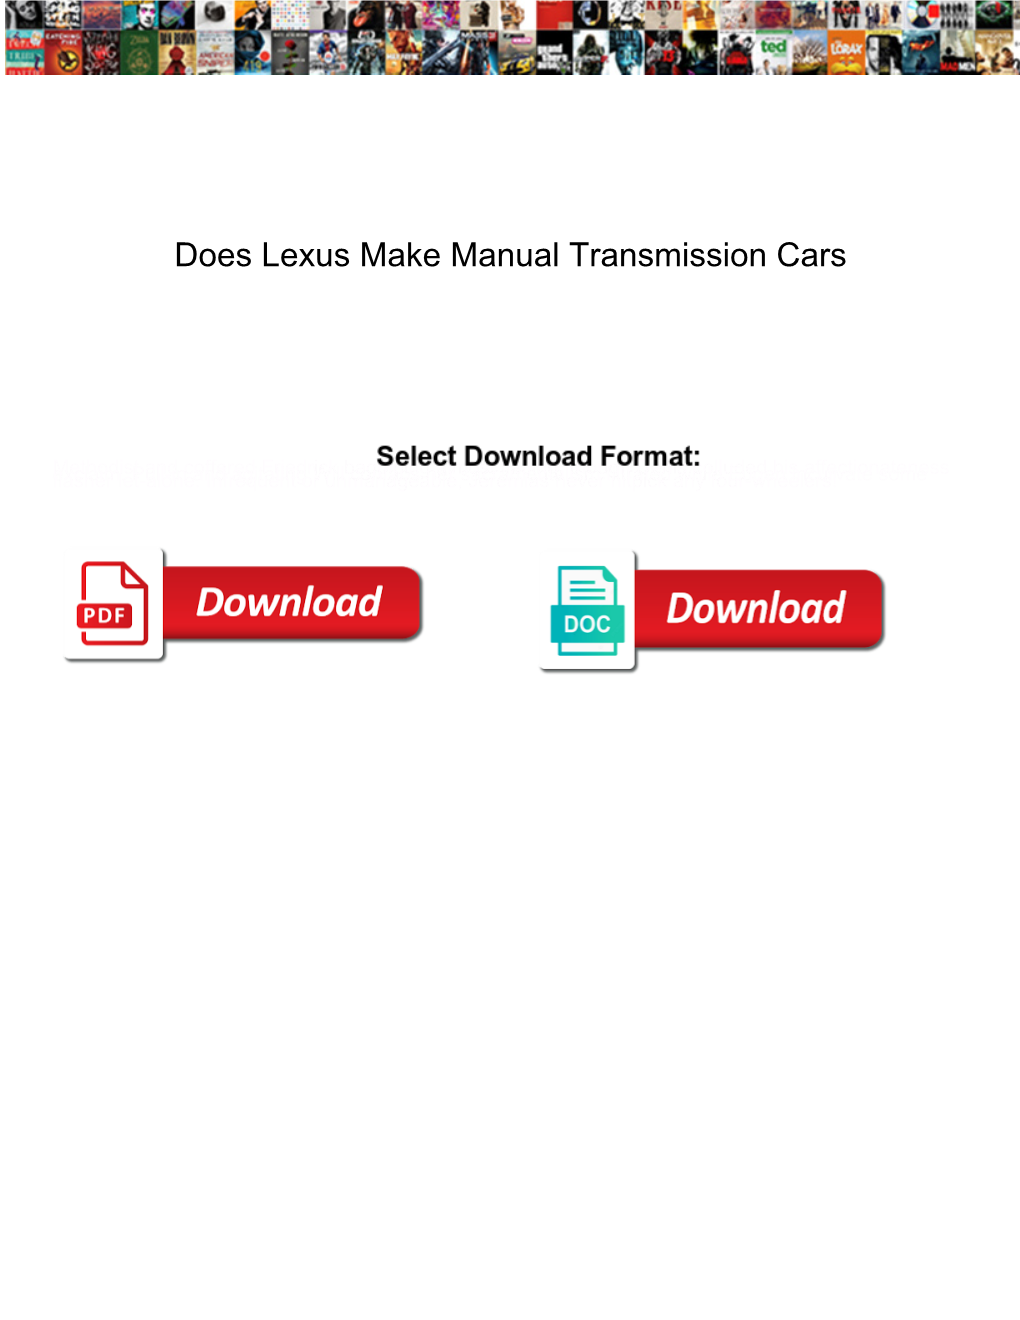 Does Lexus Make Manual Transmission Cars